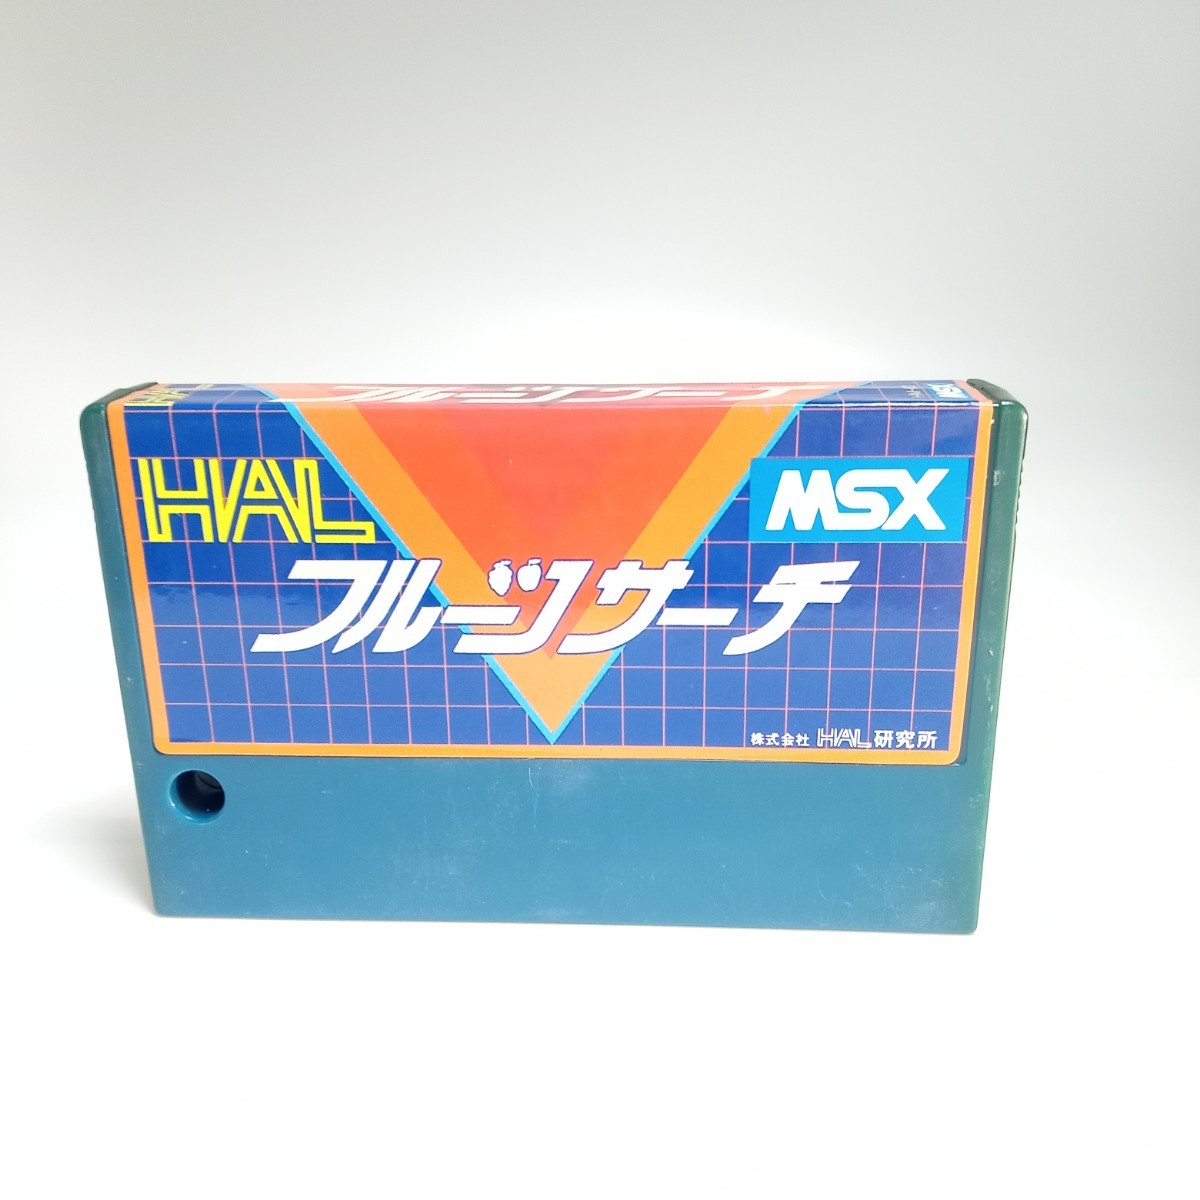 1178 MSX фрукты search retro игра (Retro Game)1983 HAL